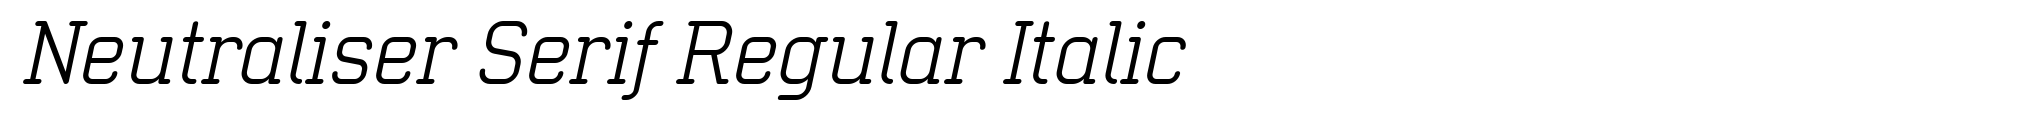 Neutraliser Serif Regular Italic image